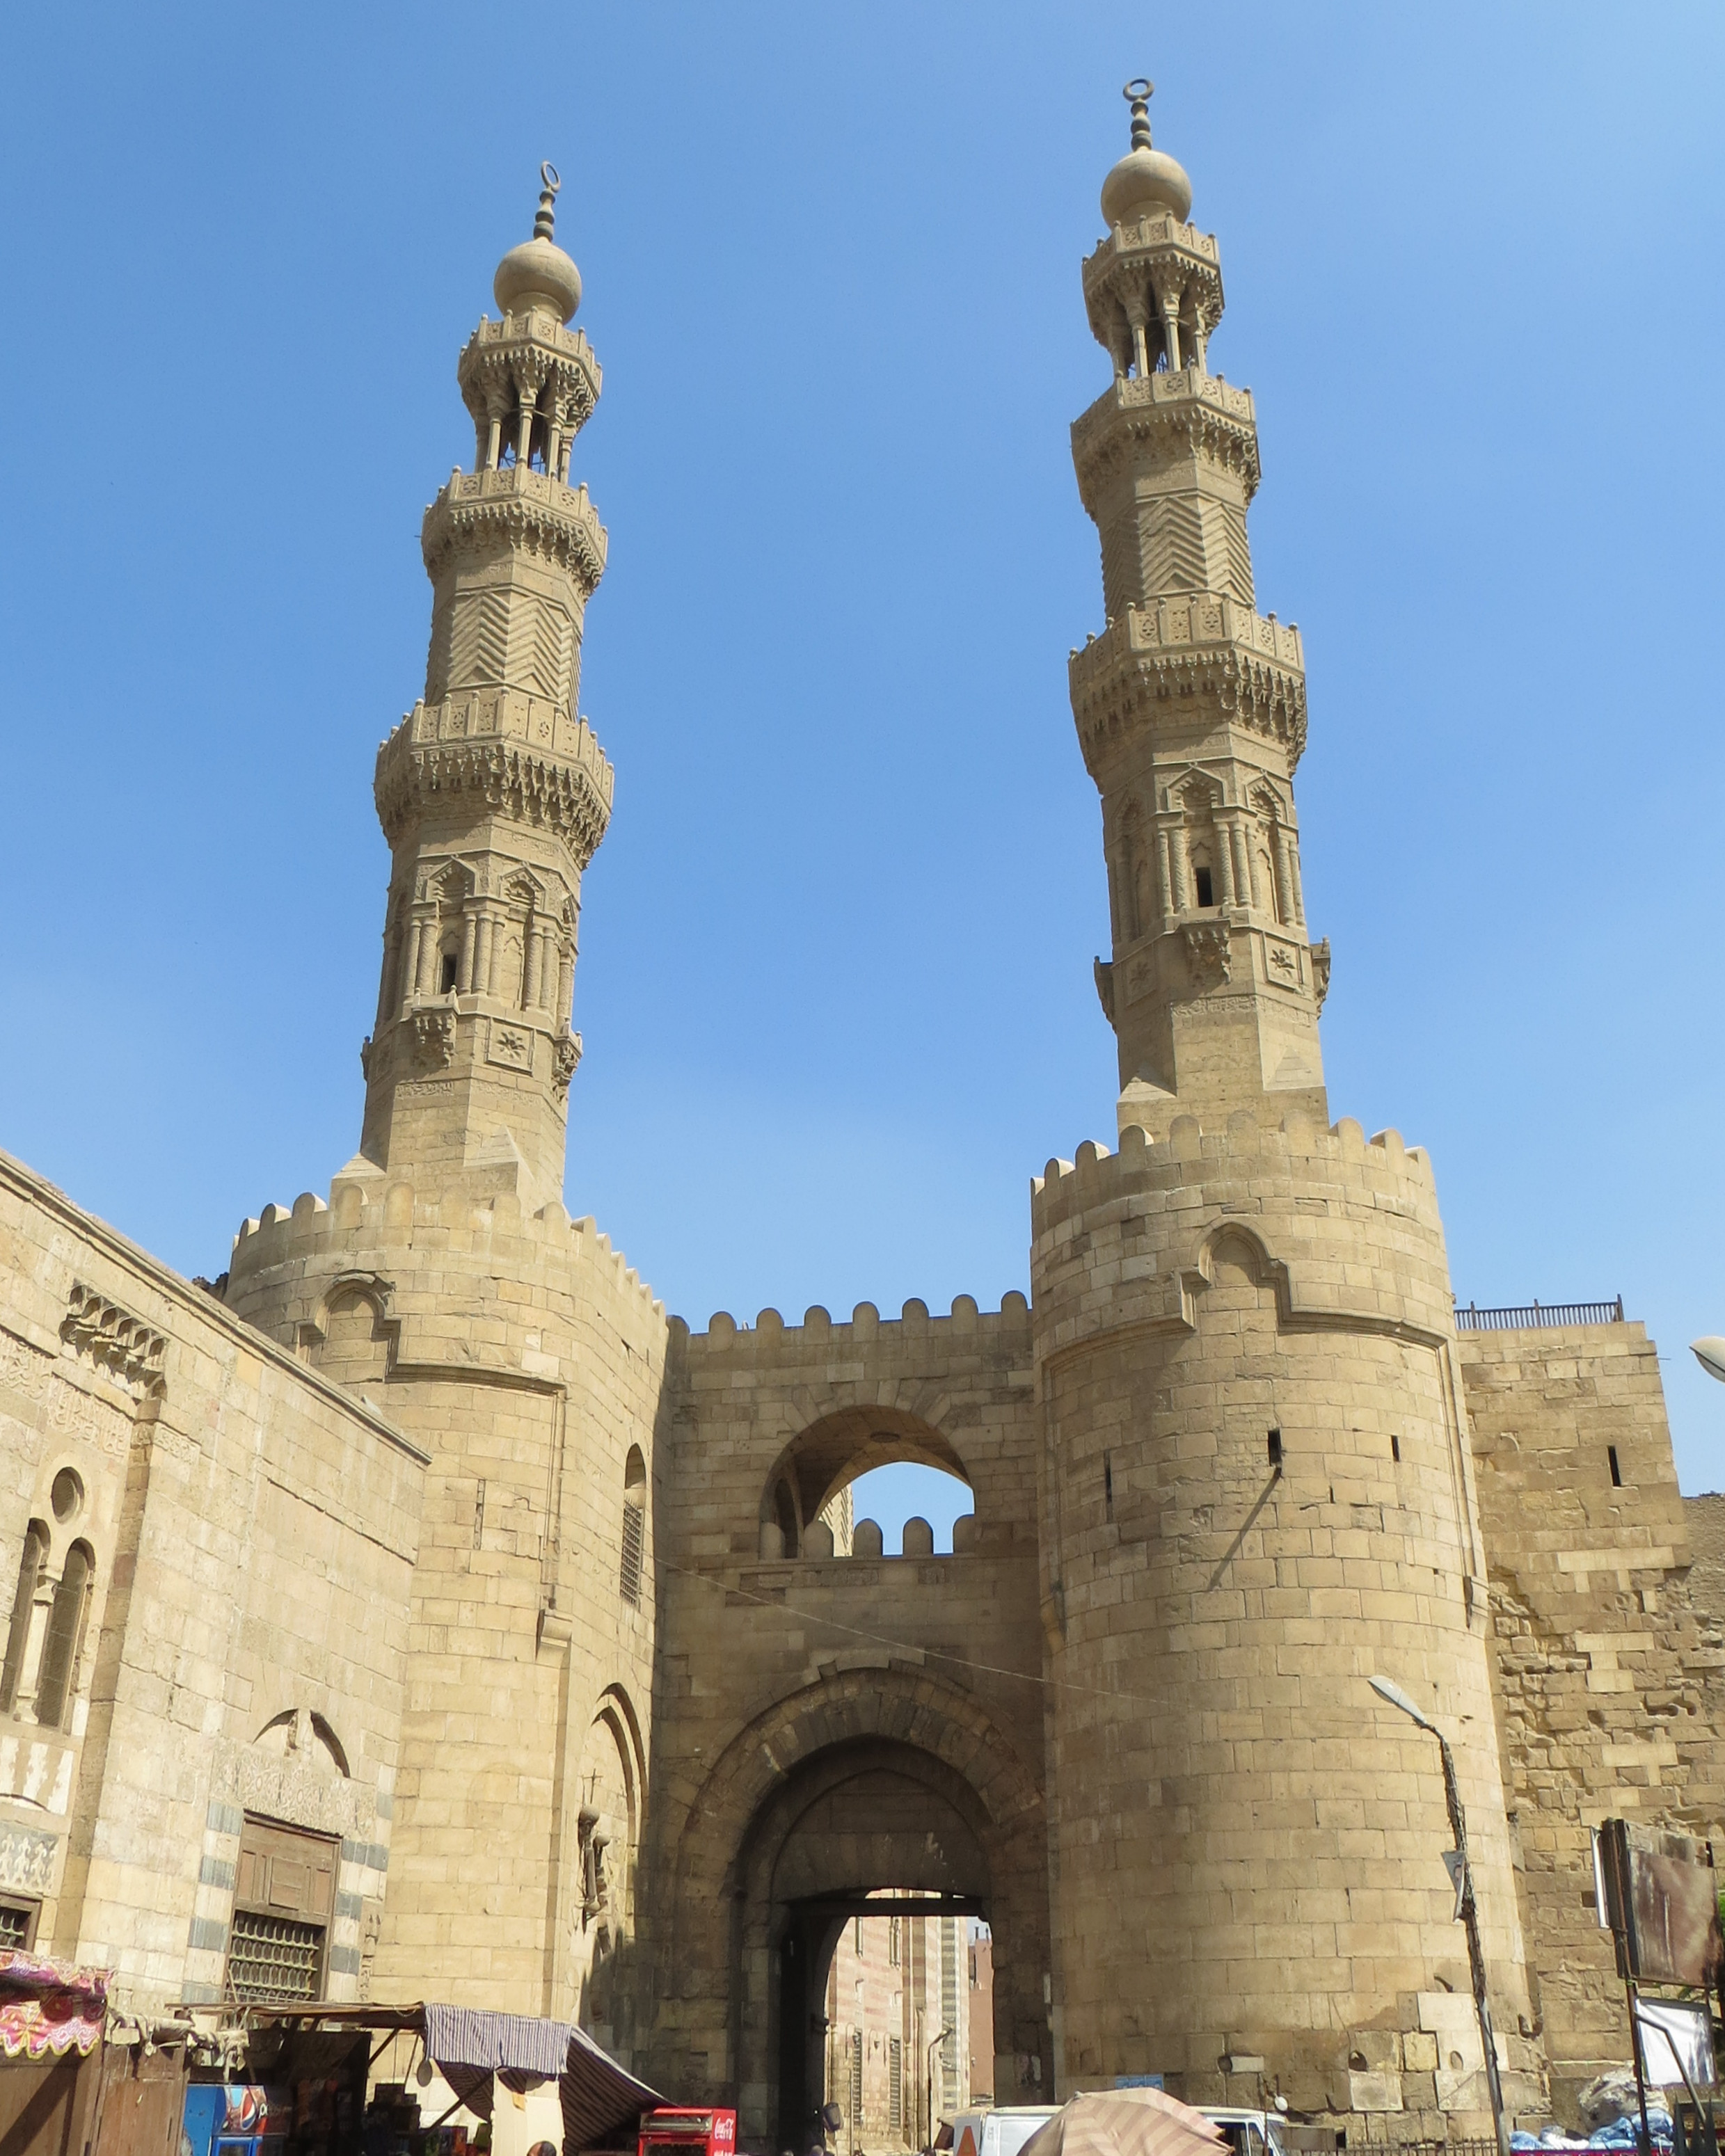 Cairo old Gates